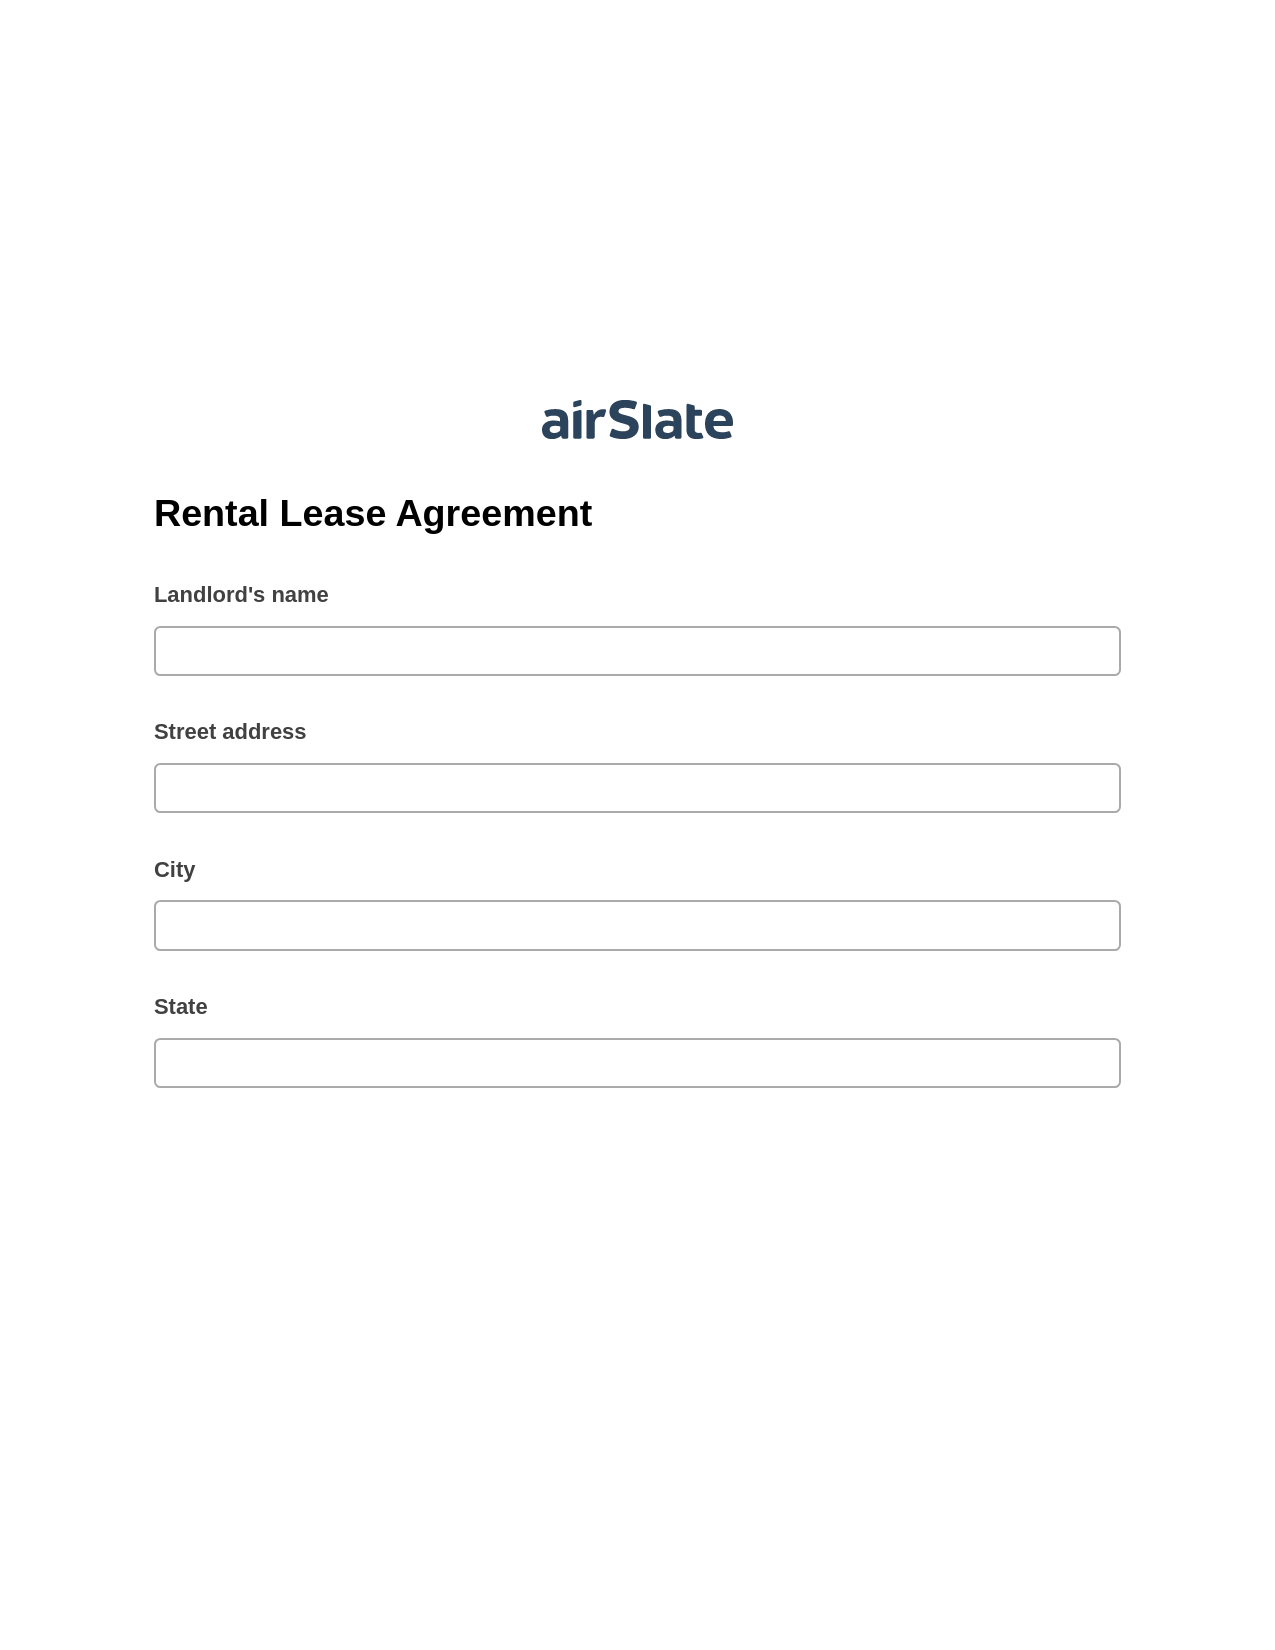 Multirole Rental Lease Agreement Pre-fill from MySQL Dropdown Options Bot, Lock the slate bot, Export to Google Sheet Bot